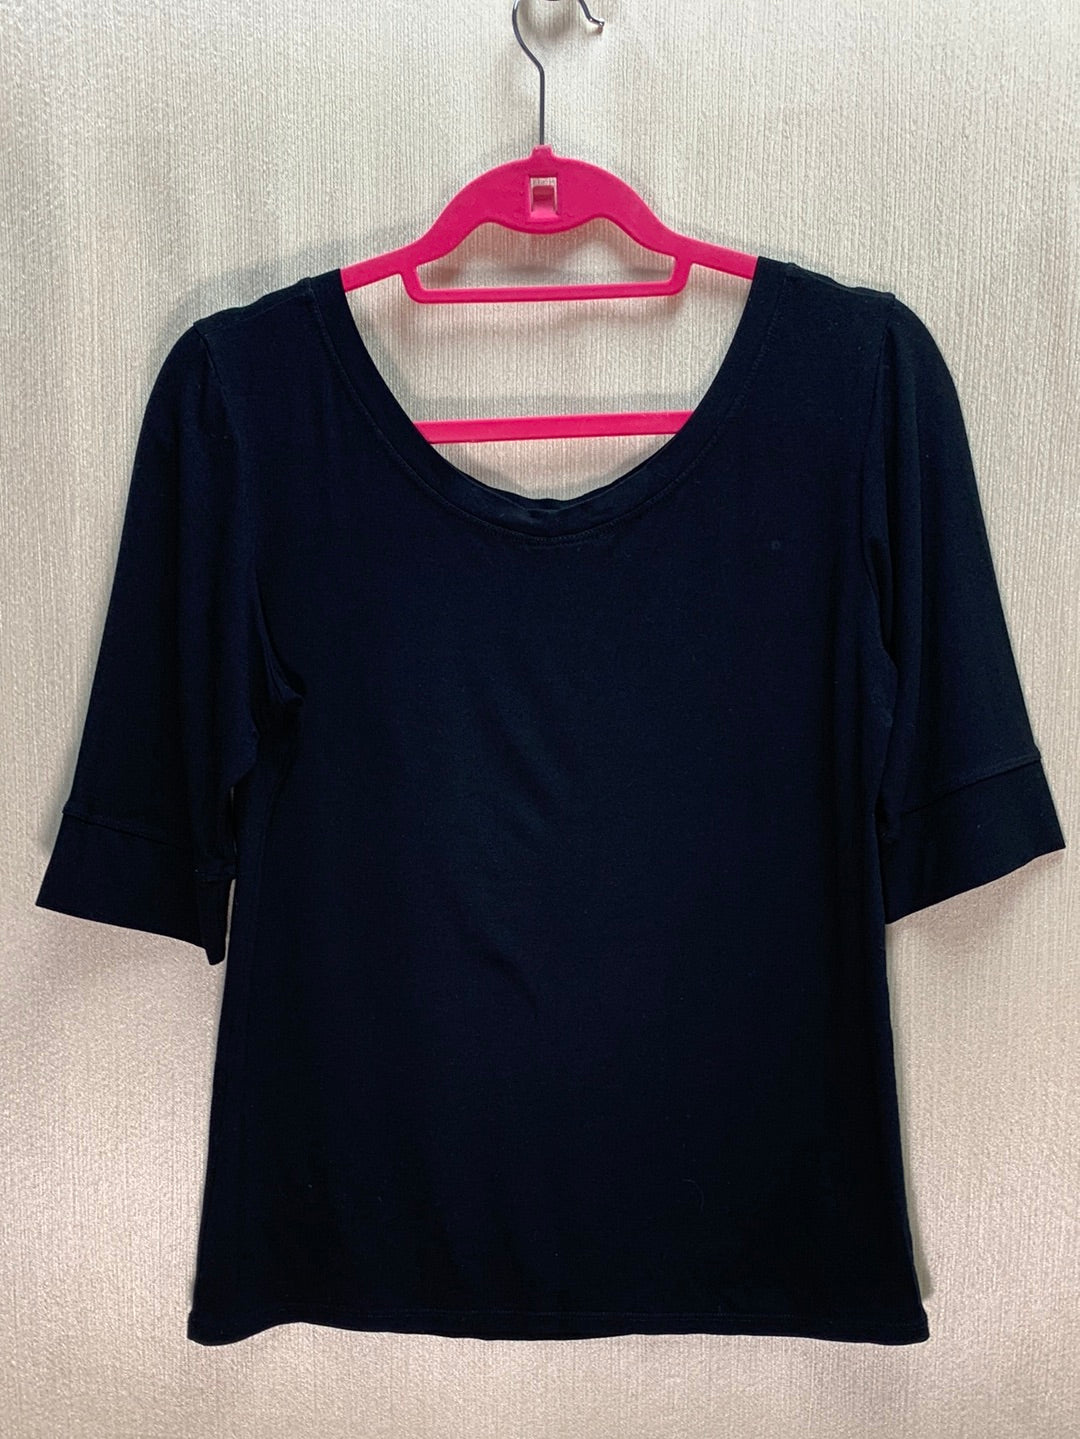 SALAAM black Rayon Blend Short (Half) Sleeve Ballet Tee Shirt - L